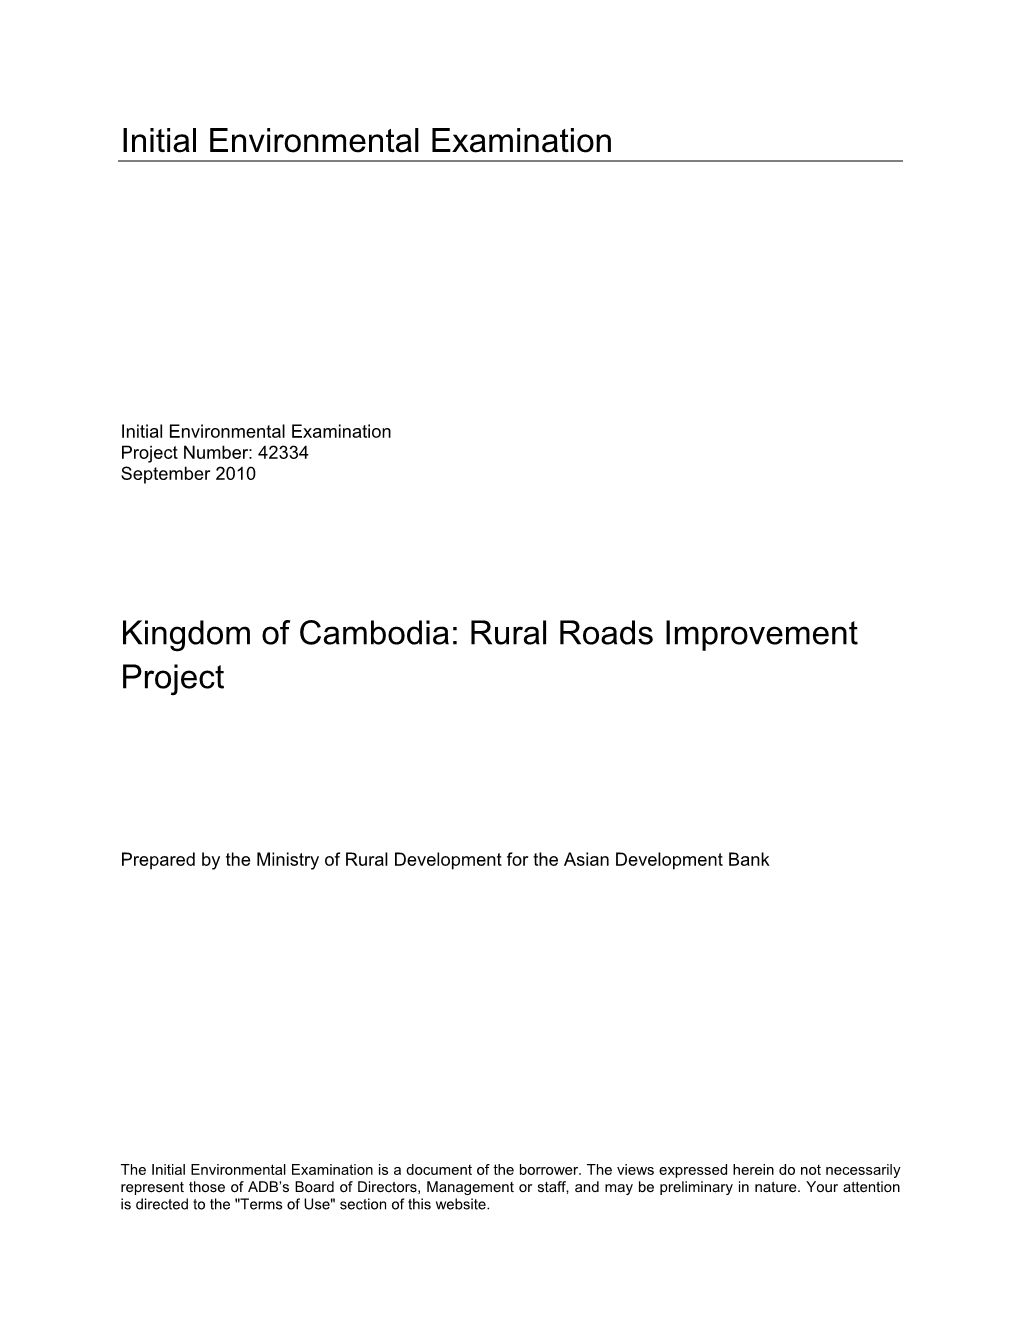 Kingdom of Cambodia: Rural Roads Improvement Project